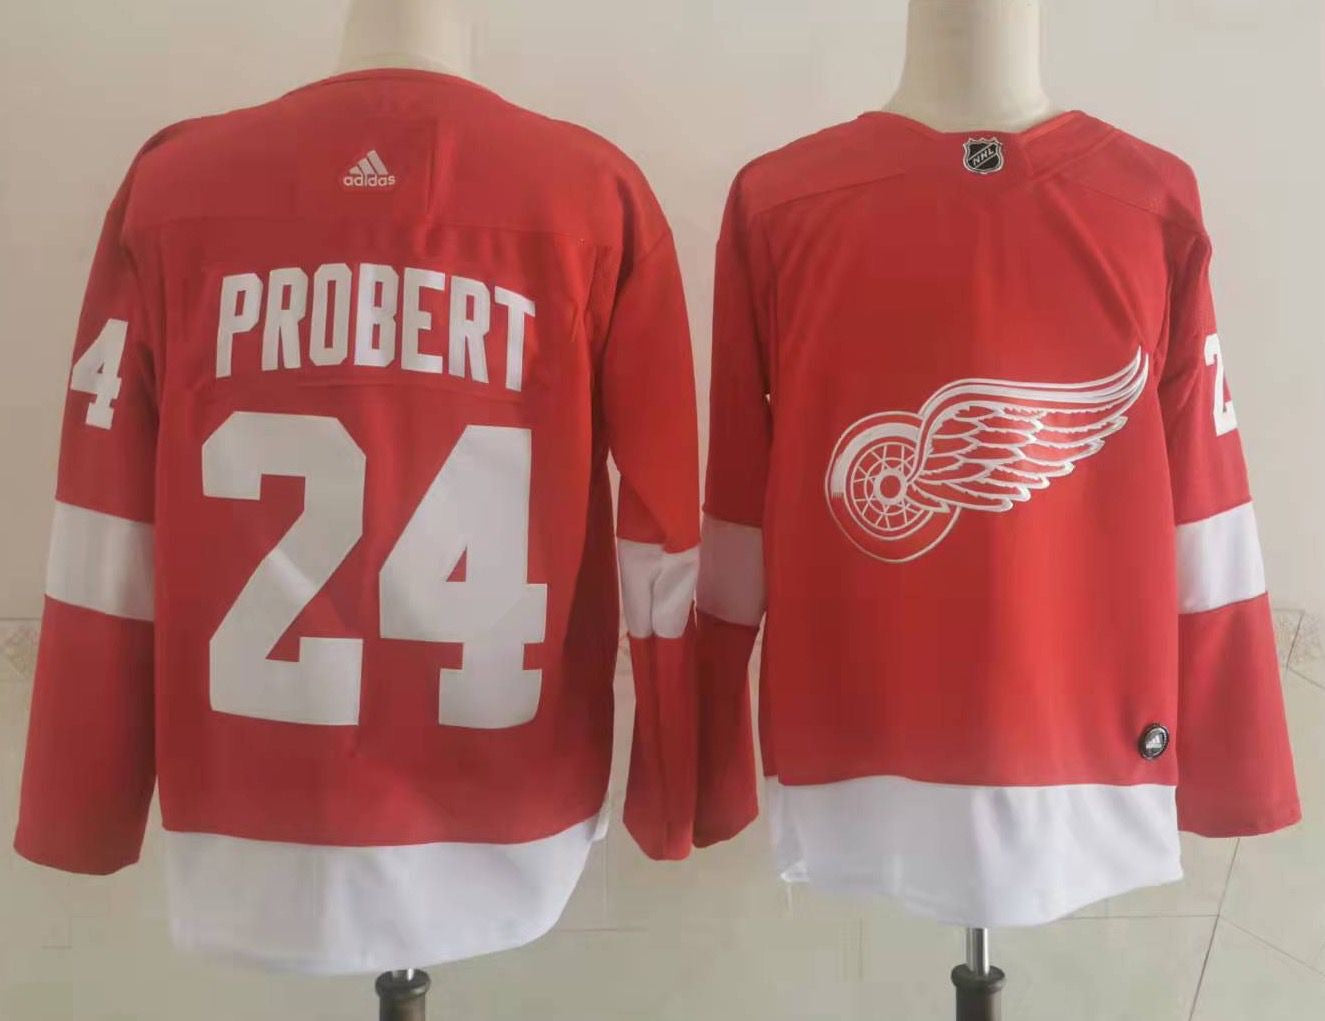 Bob Probert Detroit Red Wings CCM Premier Throwback Jersey (White)